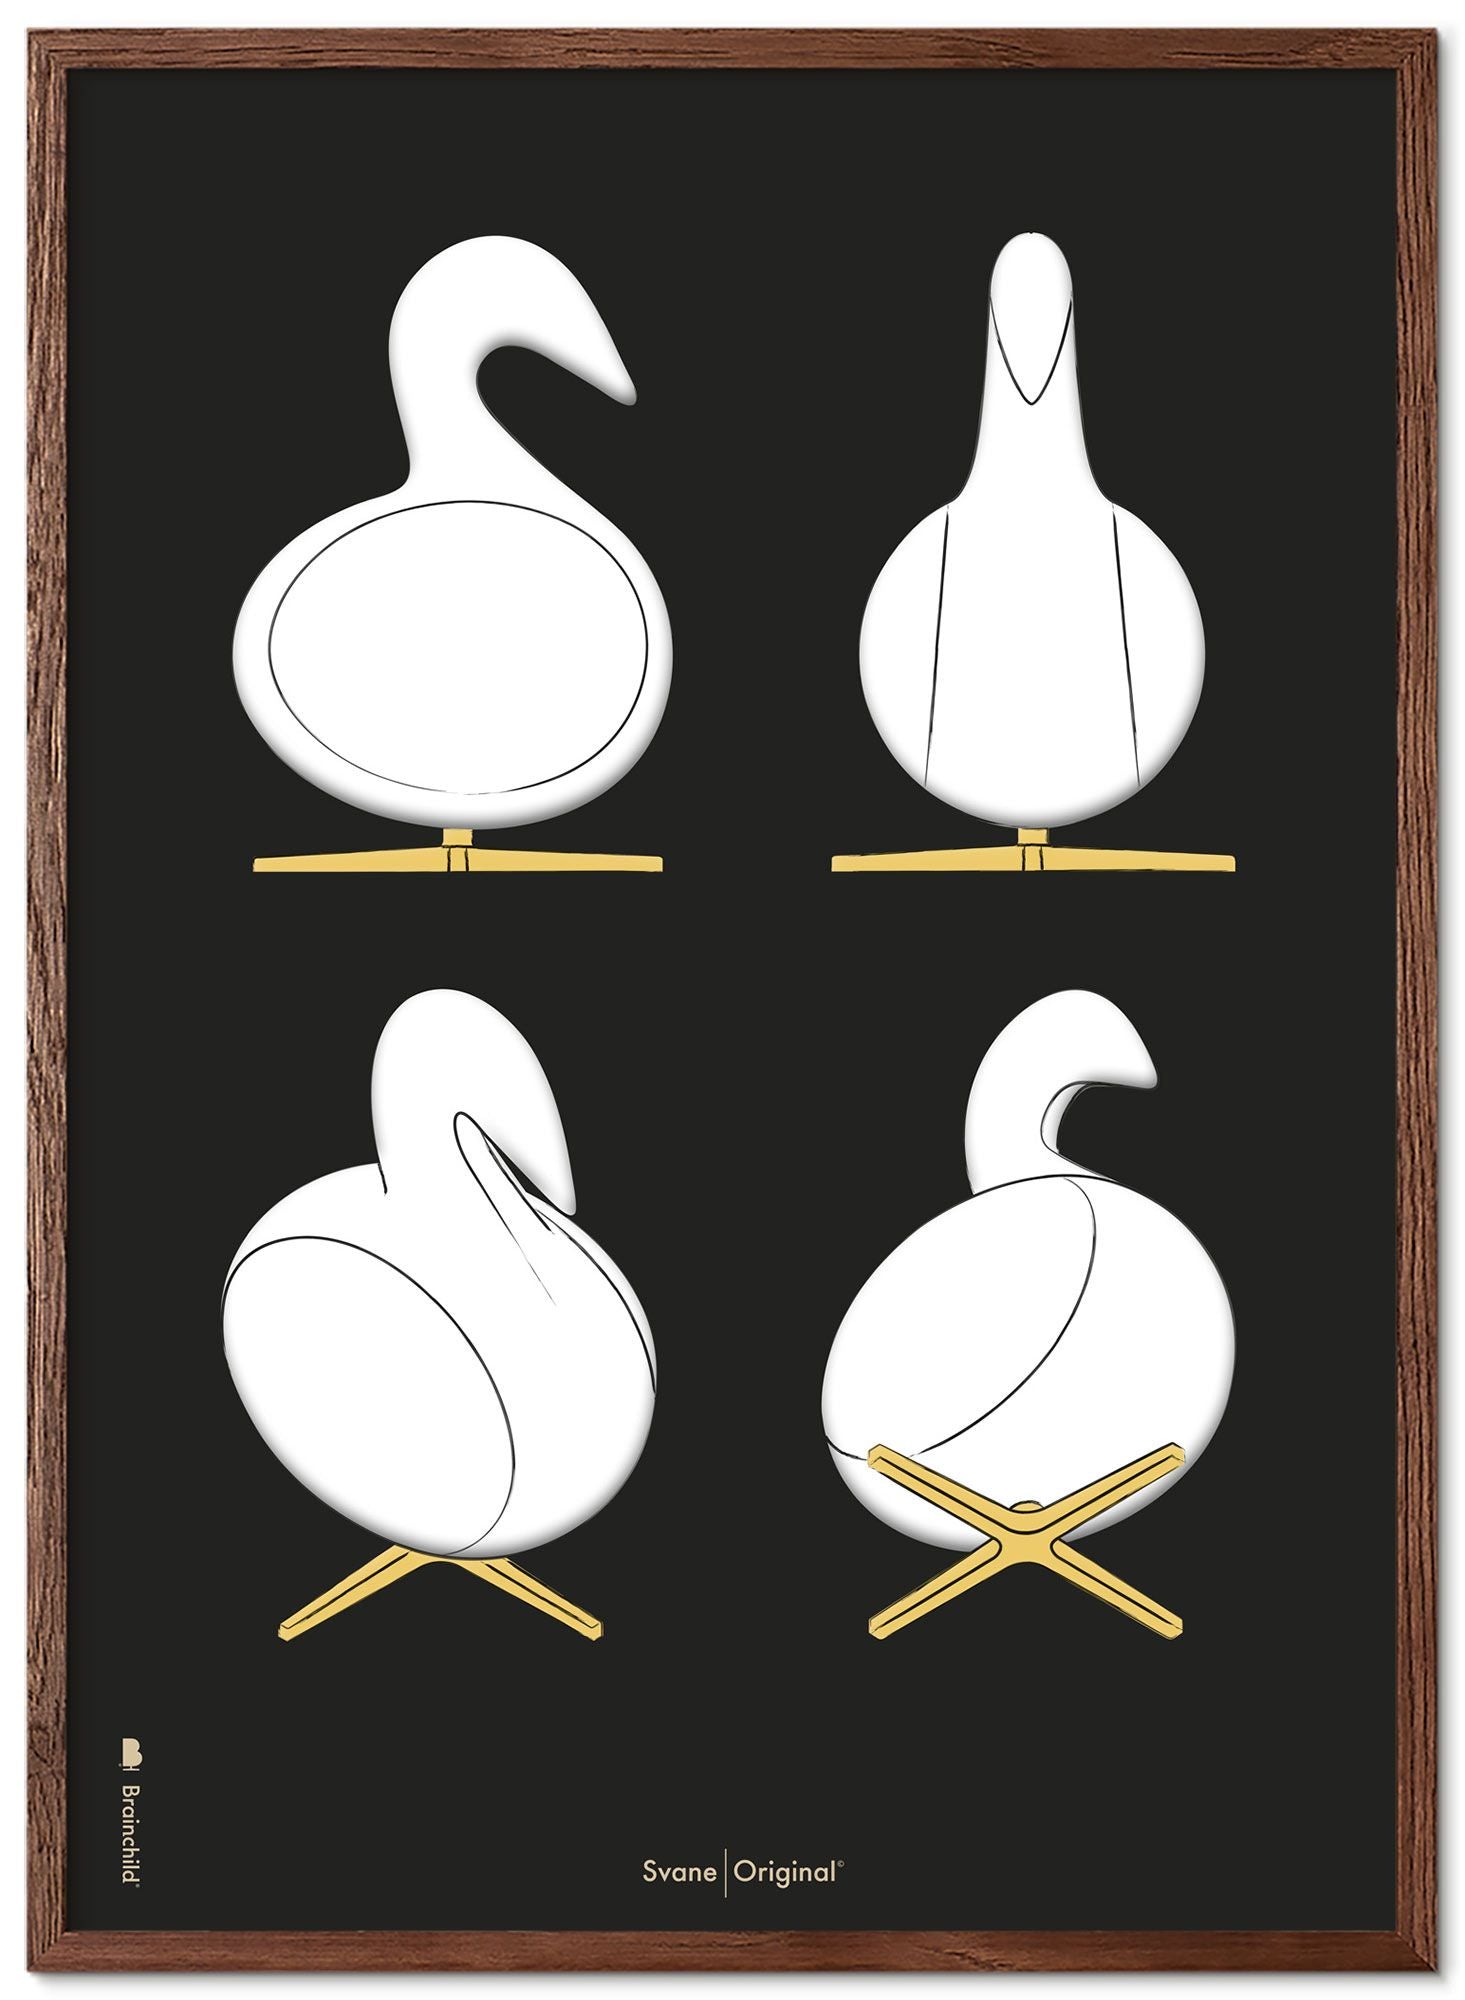 Brainchild Swan Design Sketches Poster Frame Made Of Dark Wood 30x40 Cm, Black Background